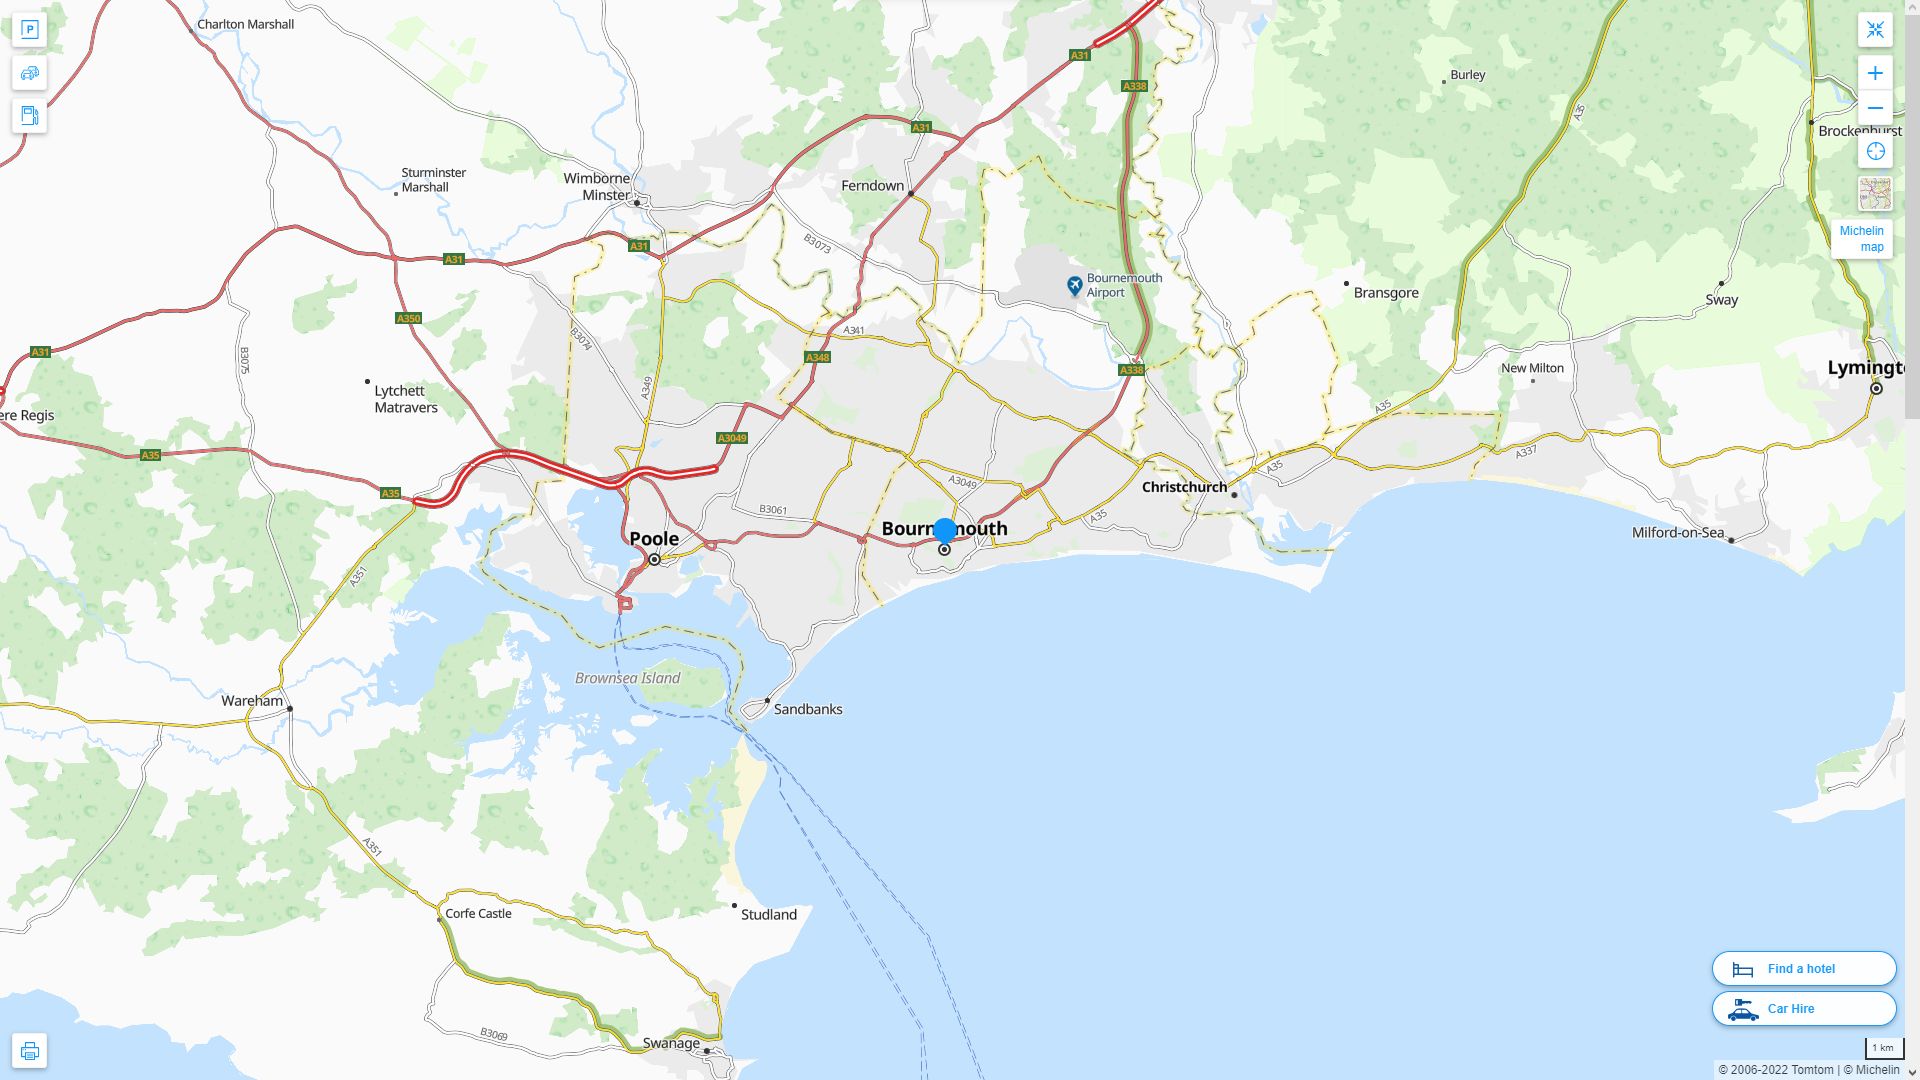 Bournemouth Royaume Uni Autoroute et carte routiere